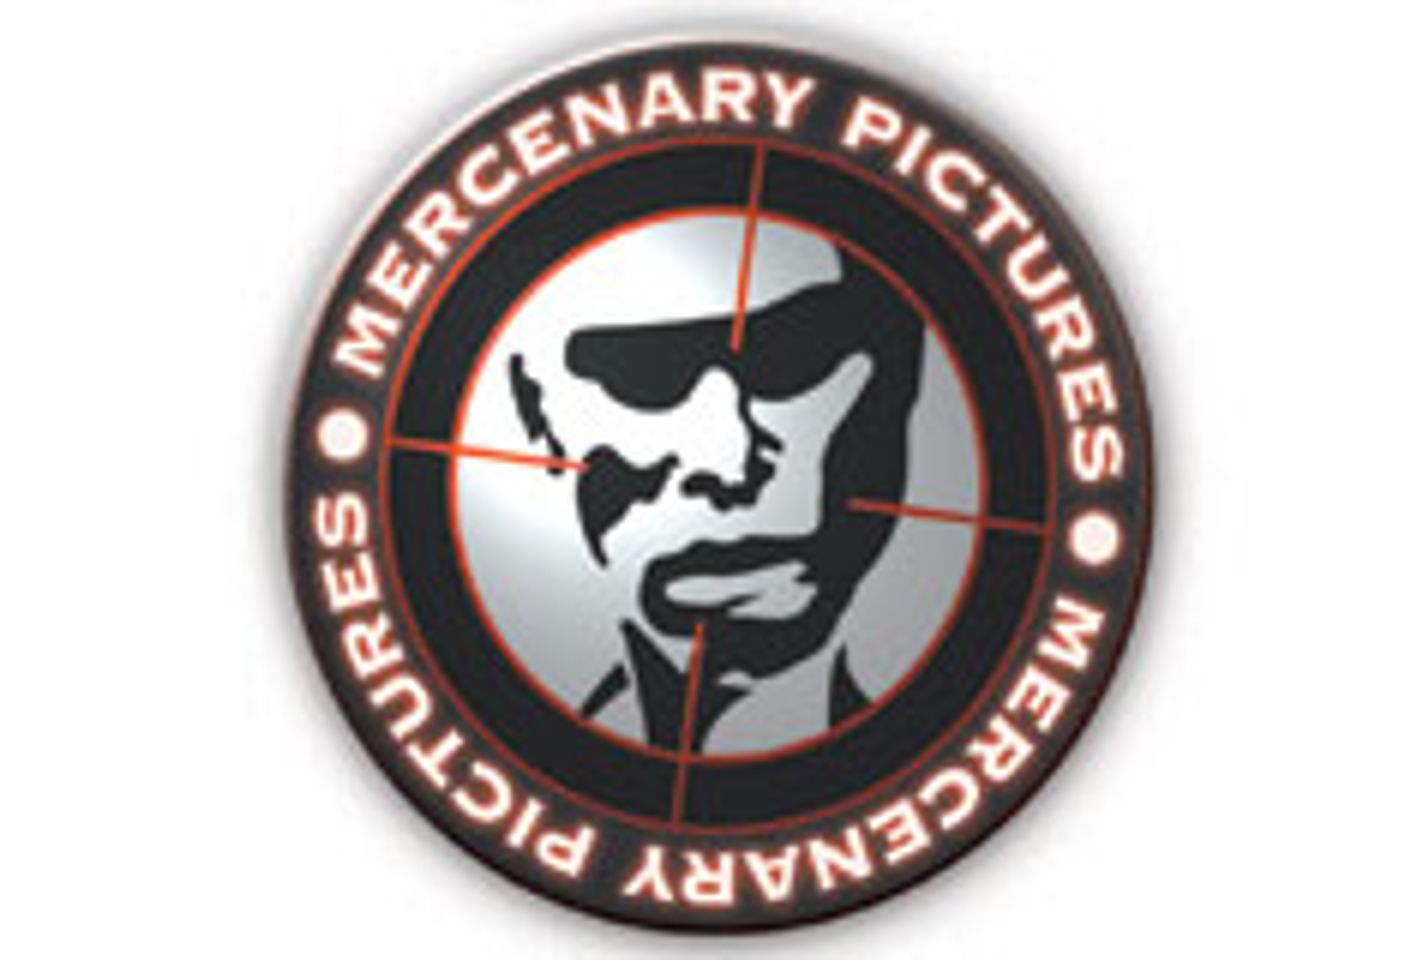 Mercenary/Black Viking Launch Business-to-Business Site